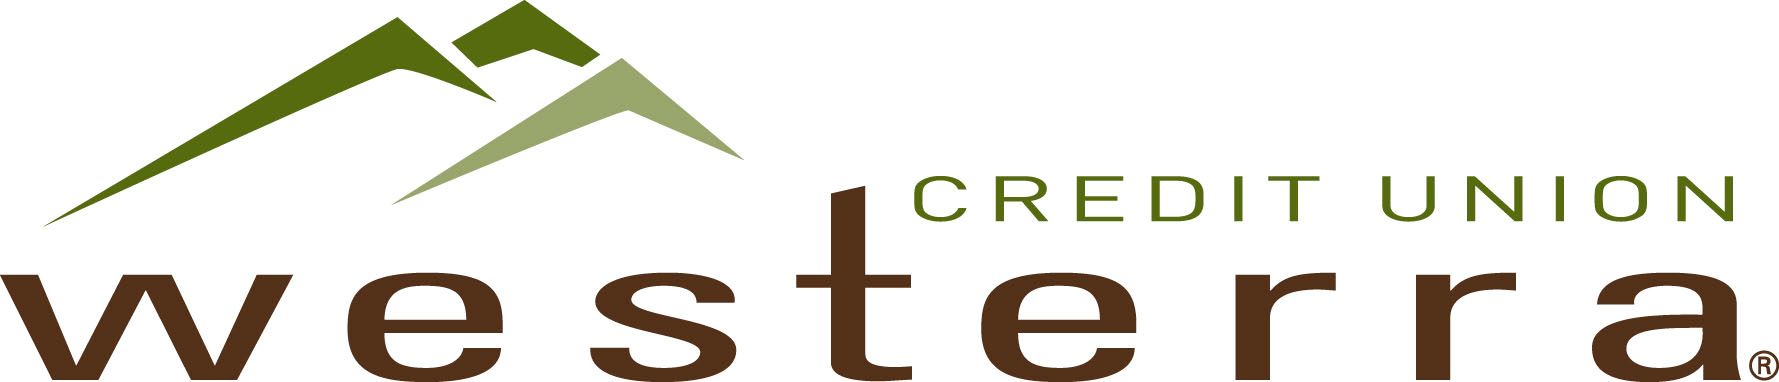 Westerra Credit Union